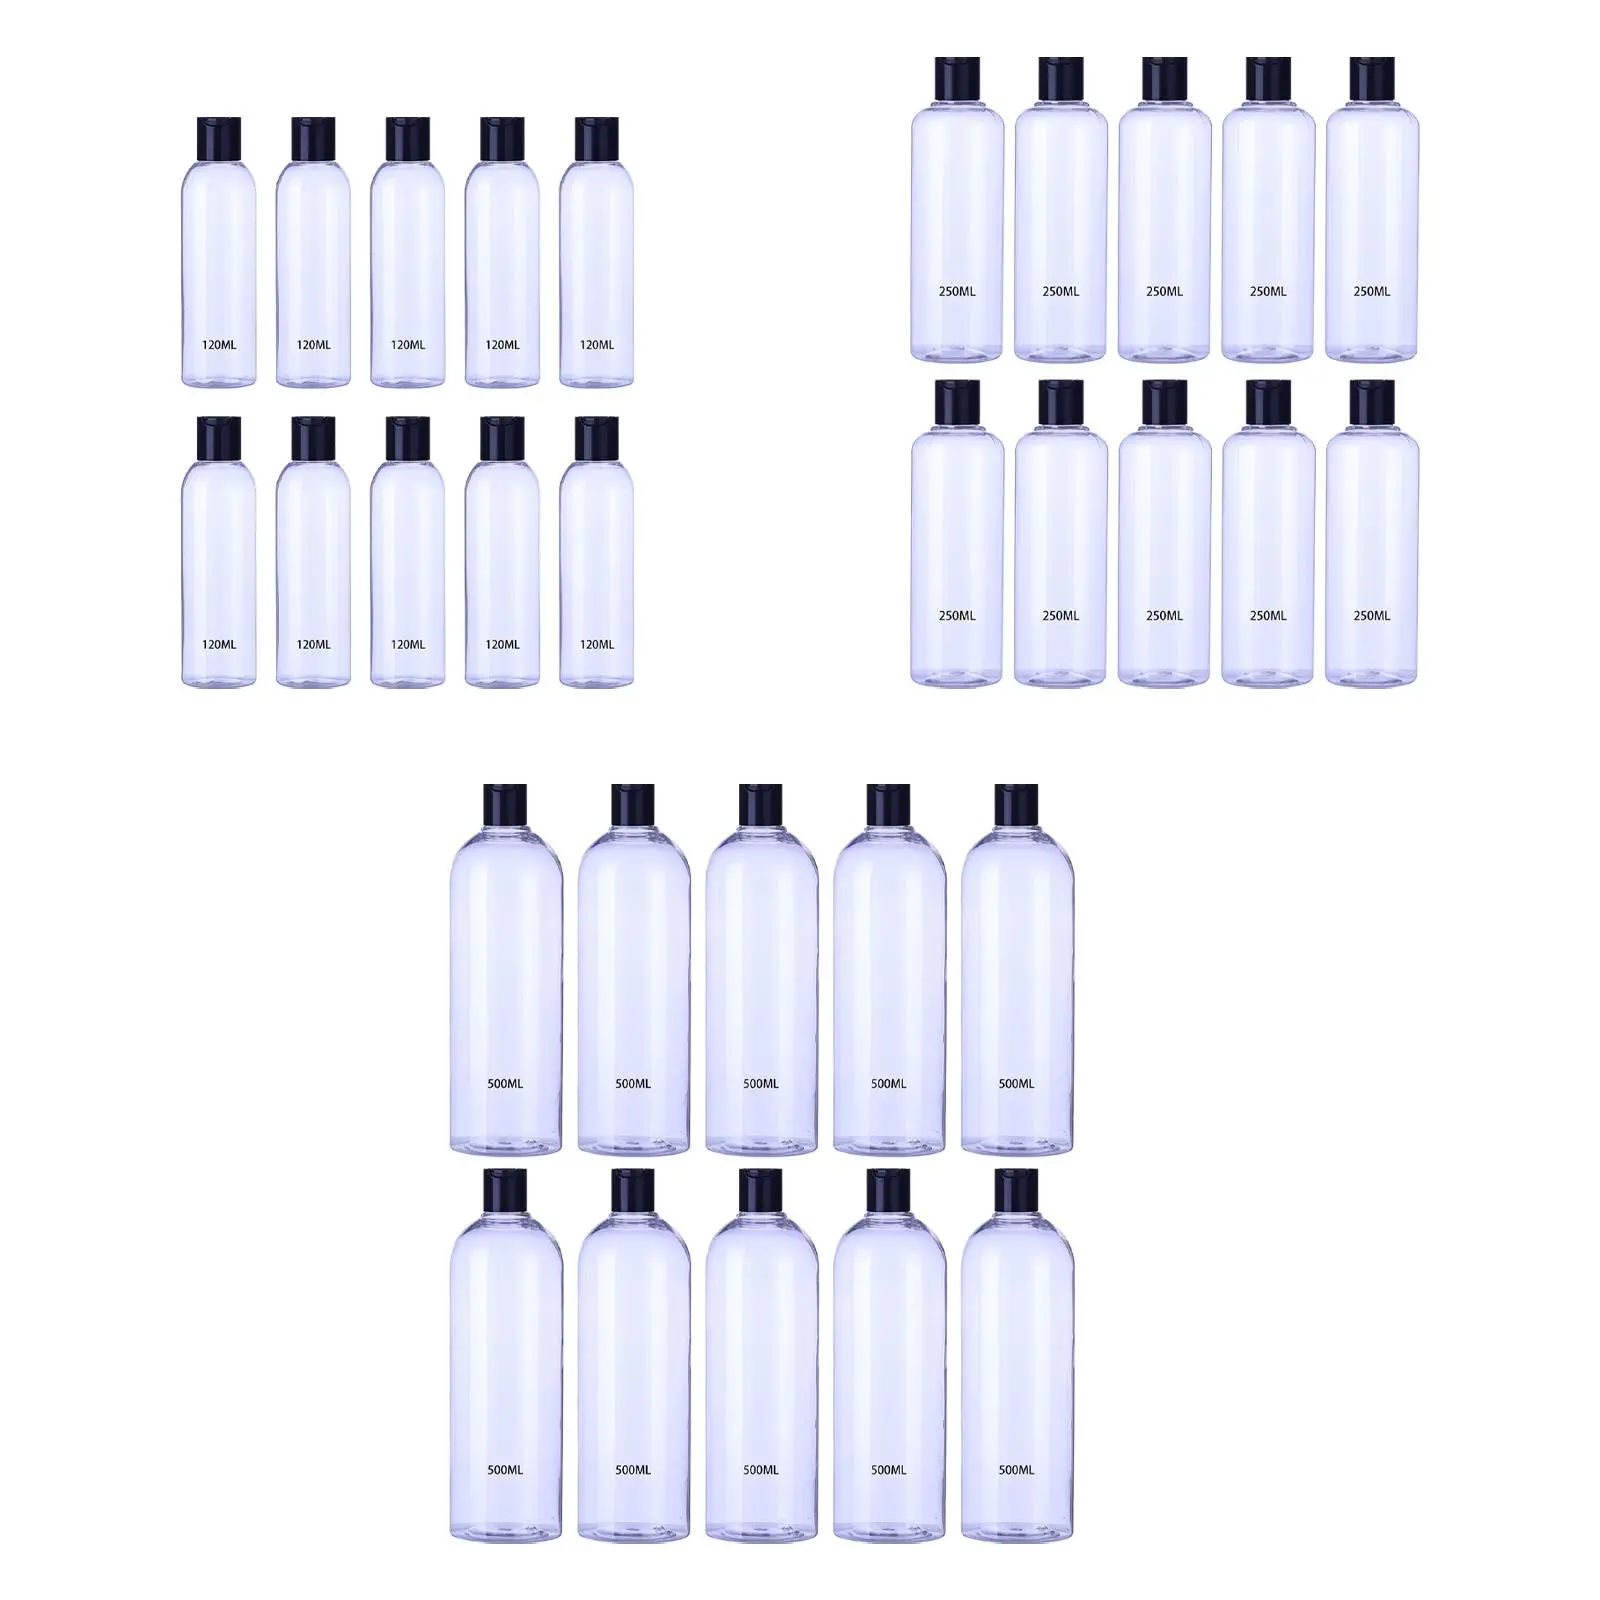 10x Empty Bottles Leakproof Refillable Stylish Durable Shower Bottle Jar Shampoo Bottle for Hotel Body Wash Shampoo Liquids